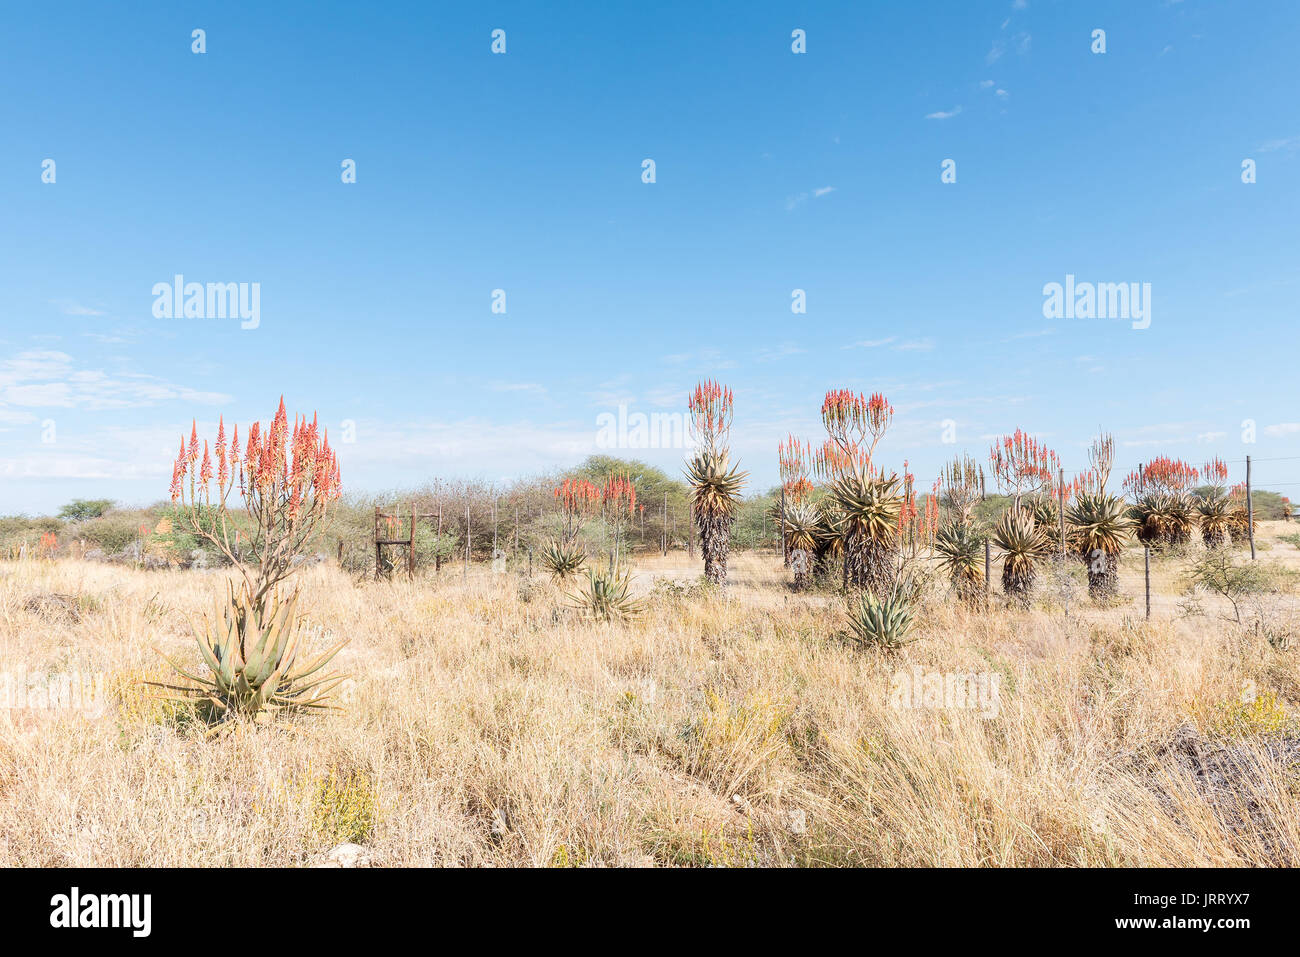 Flowering Windhoek or Mountain Aloes, Aloe littoralis, growing next to the B1-road north of Otjiwarongo in the Otjozondjupa Region of Namibia Stock Photo